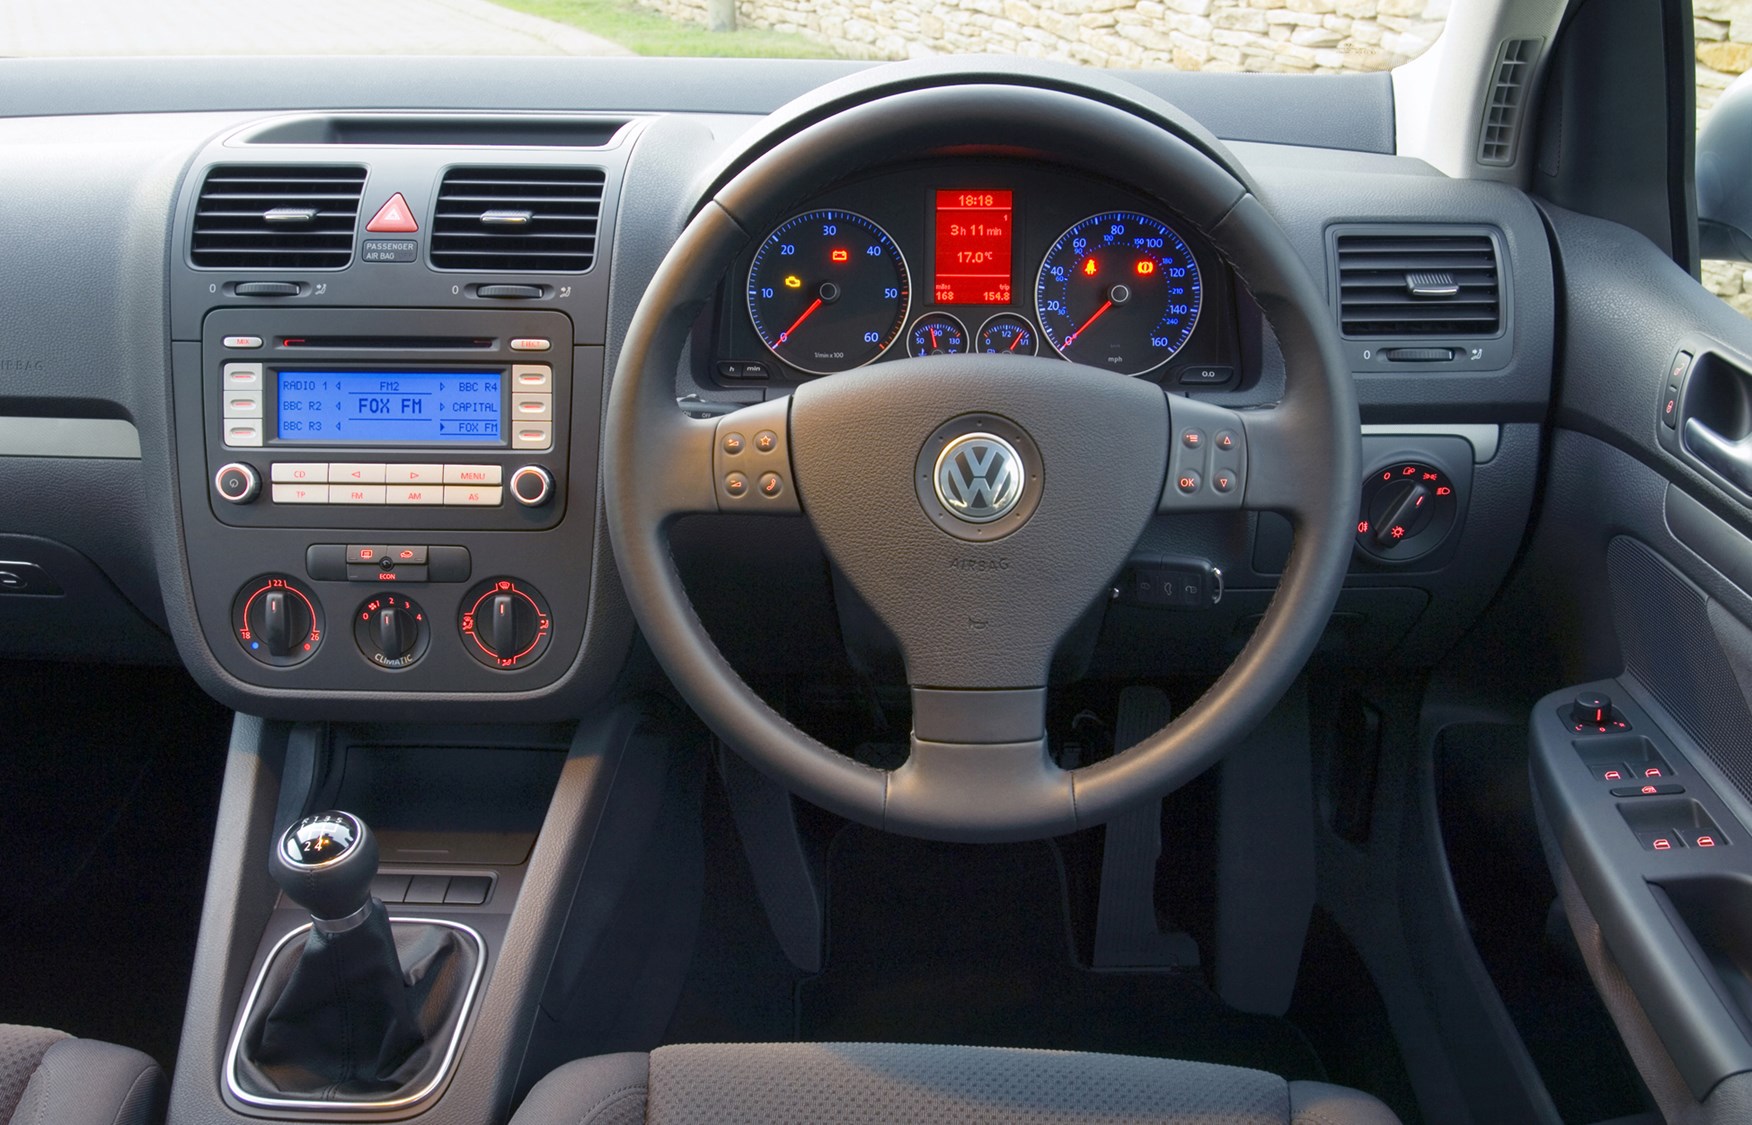 Used Volkswagen Golf Hatchback 2004 2008 Review Parkers